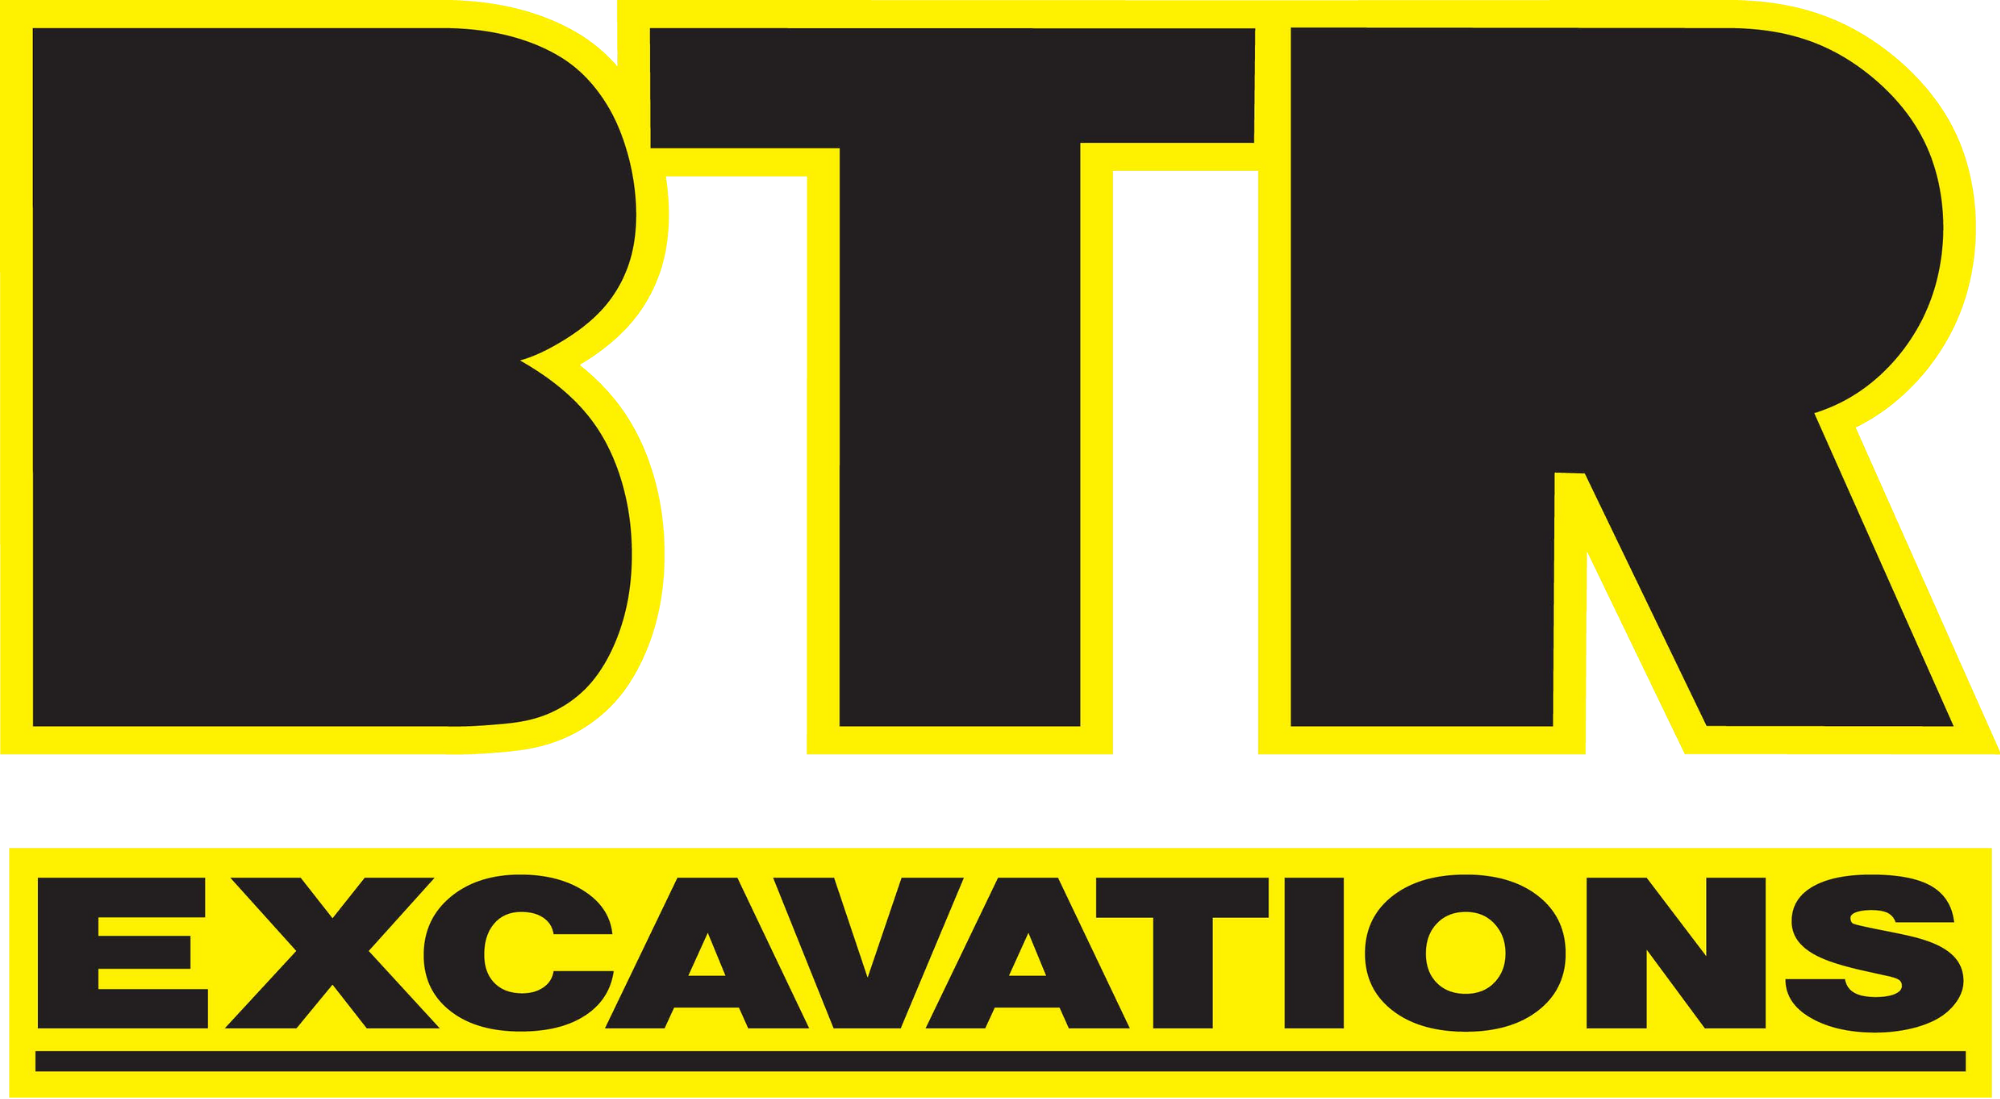 BTR Excavations logo